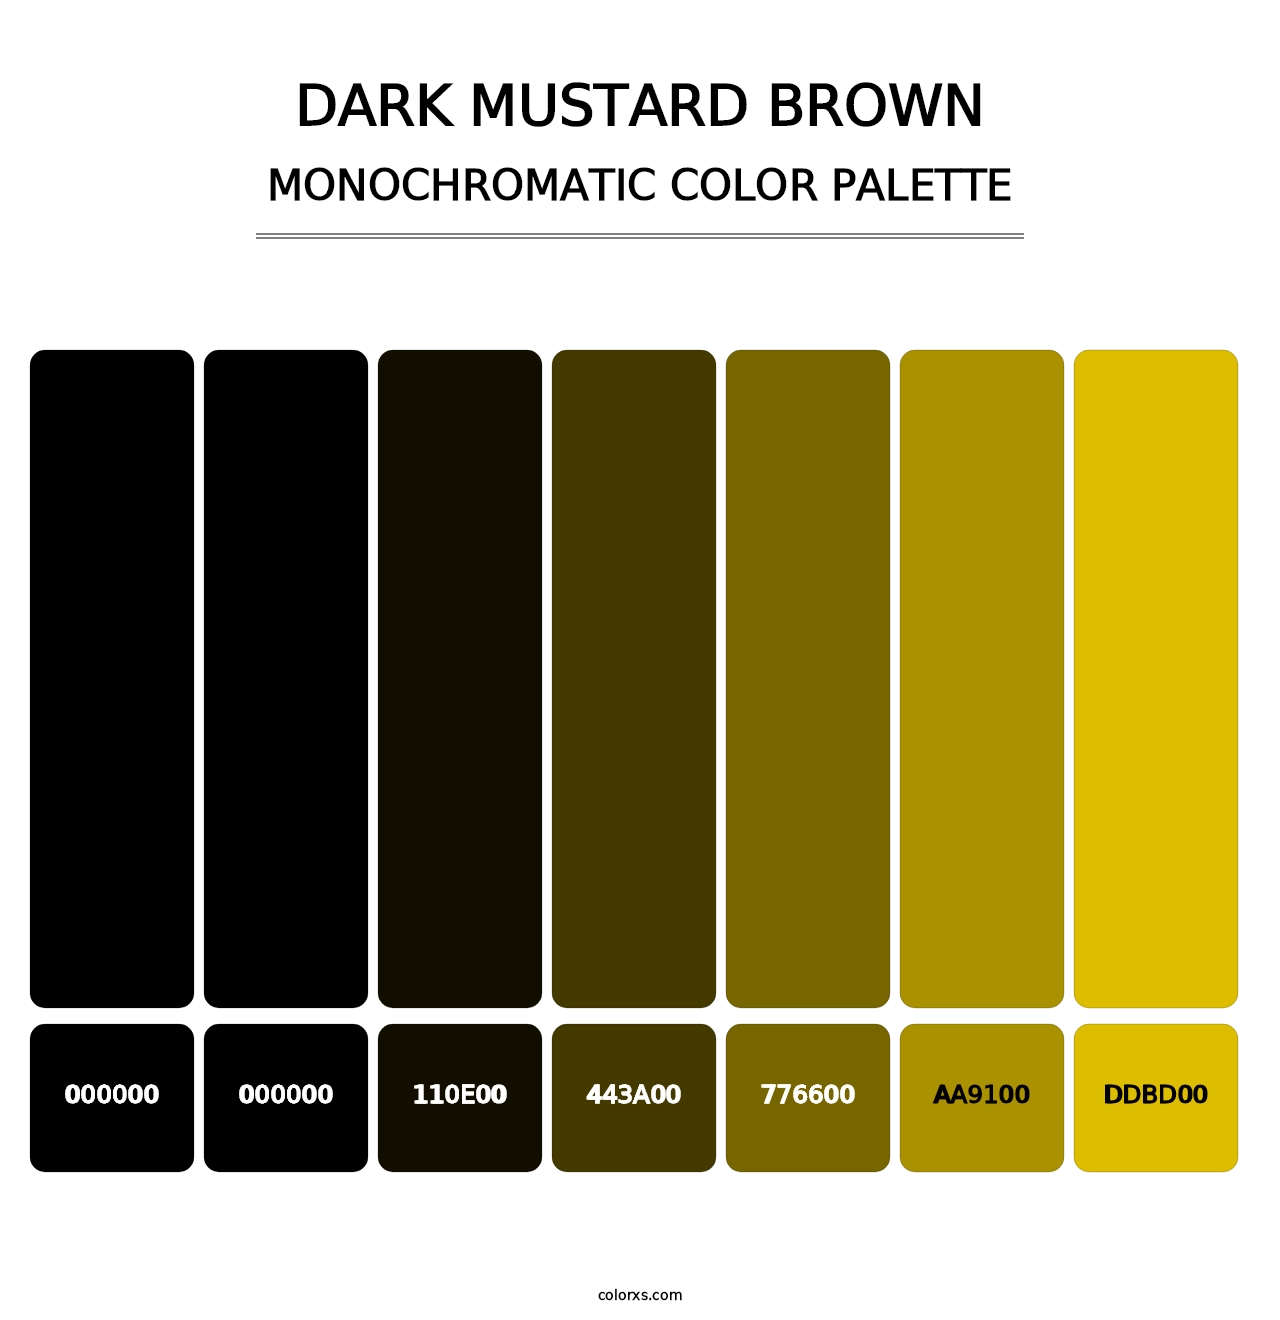 Dark Mustard Brown - Monochromatic Color Palette